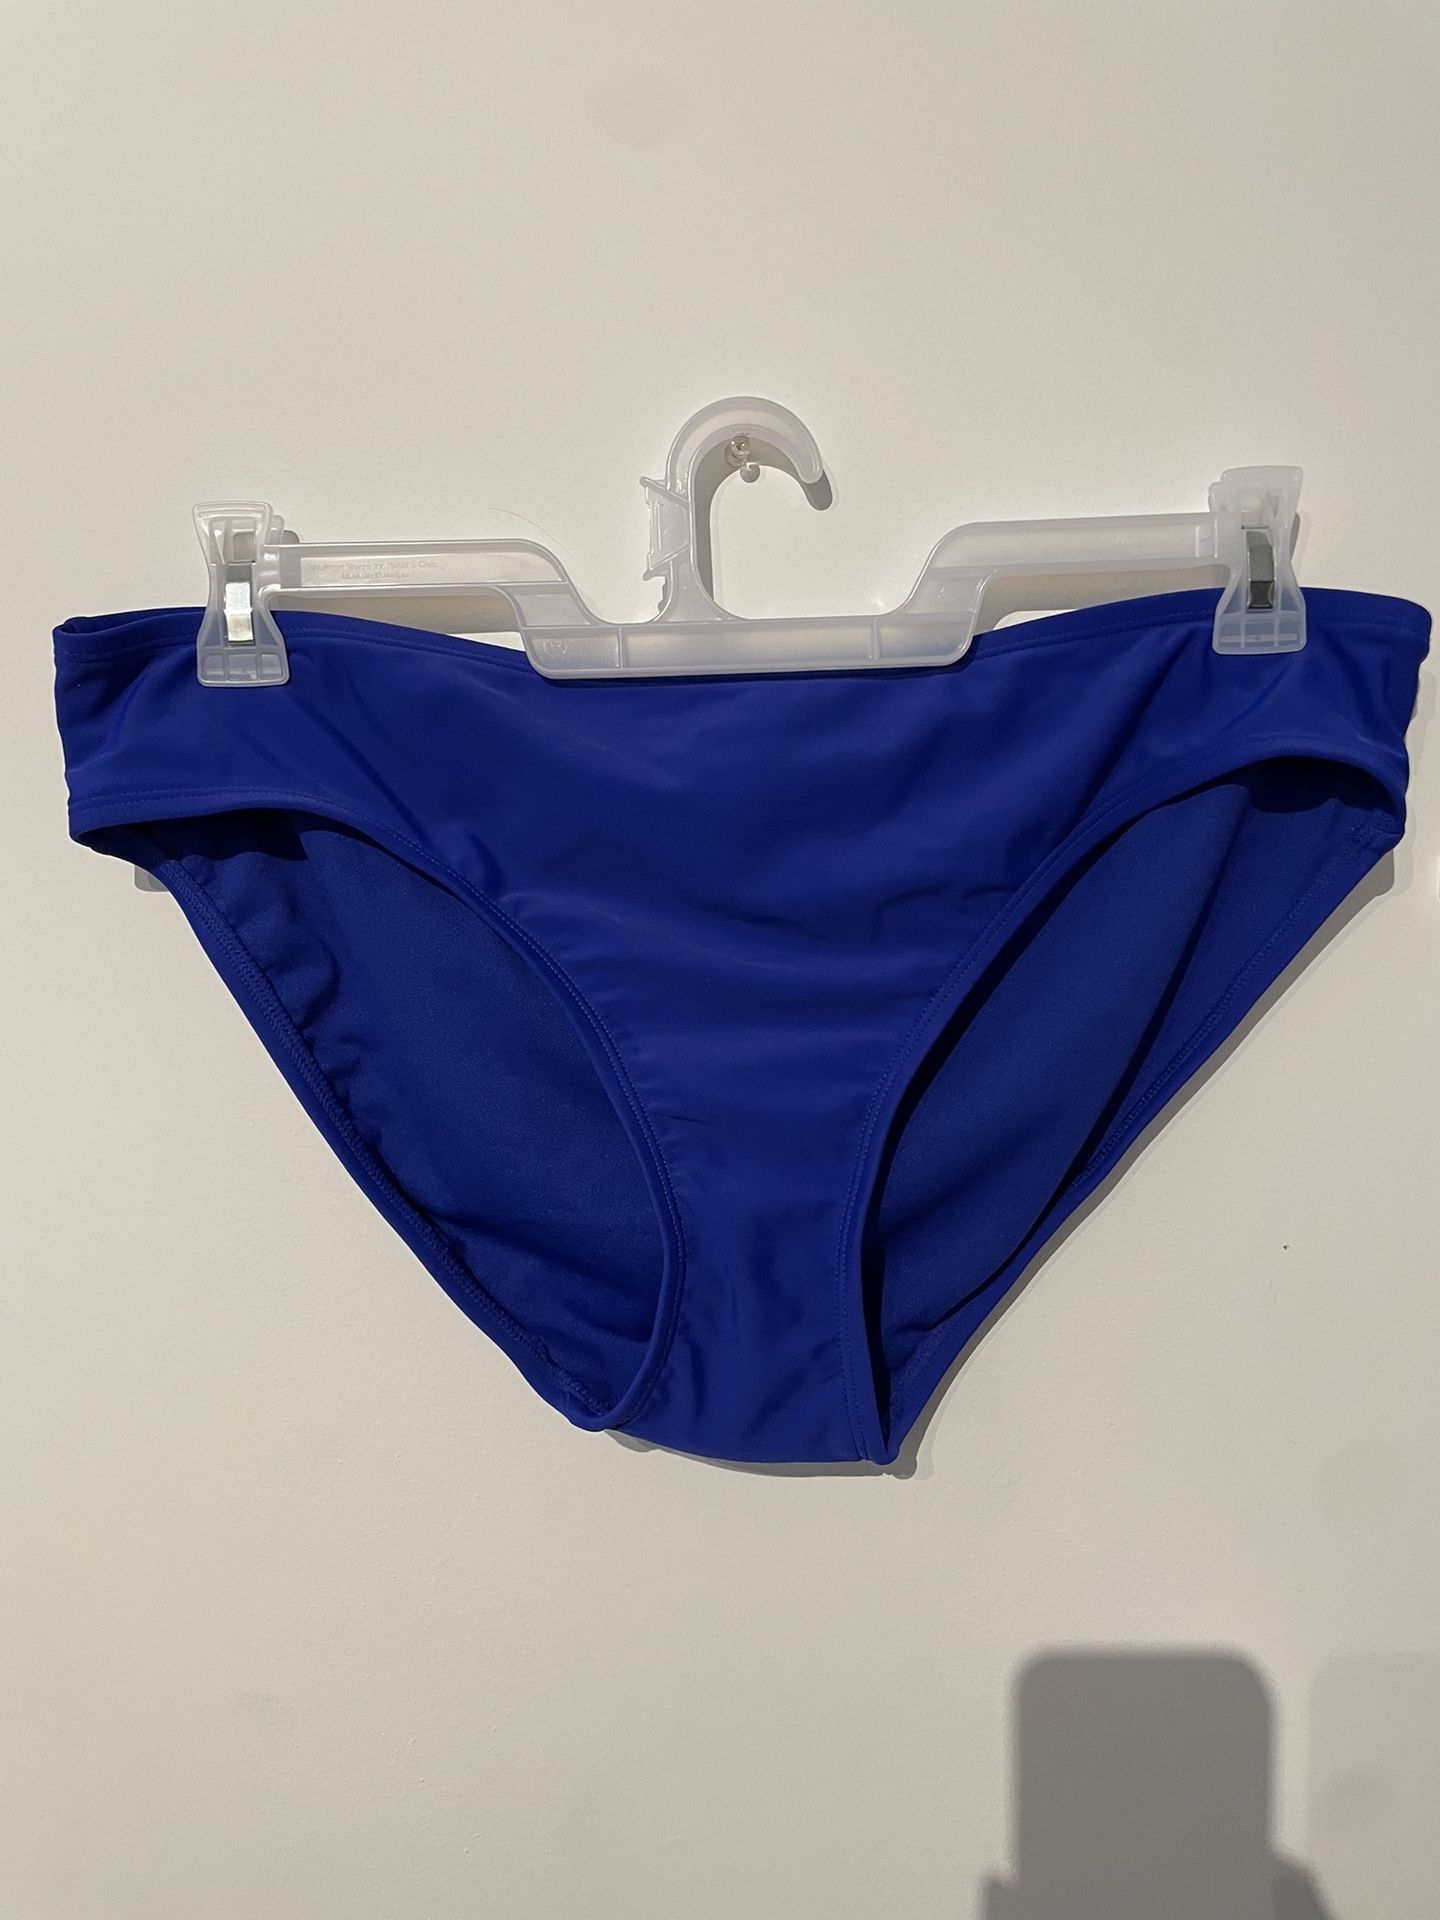 Kona Sol Bikini Bottoms Size XL(16) NWT